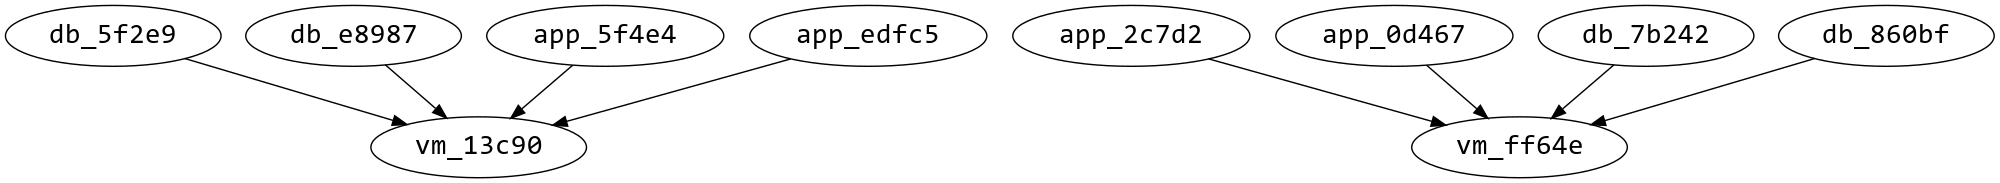 scaling_groups_diagram3